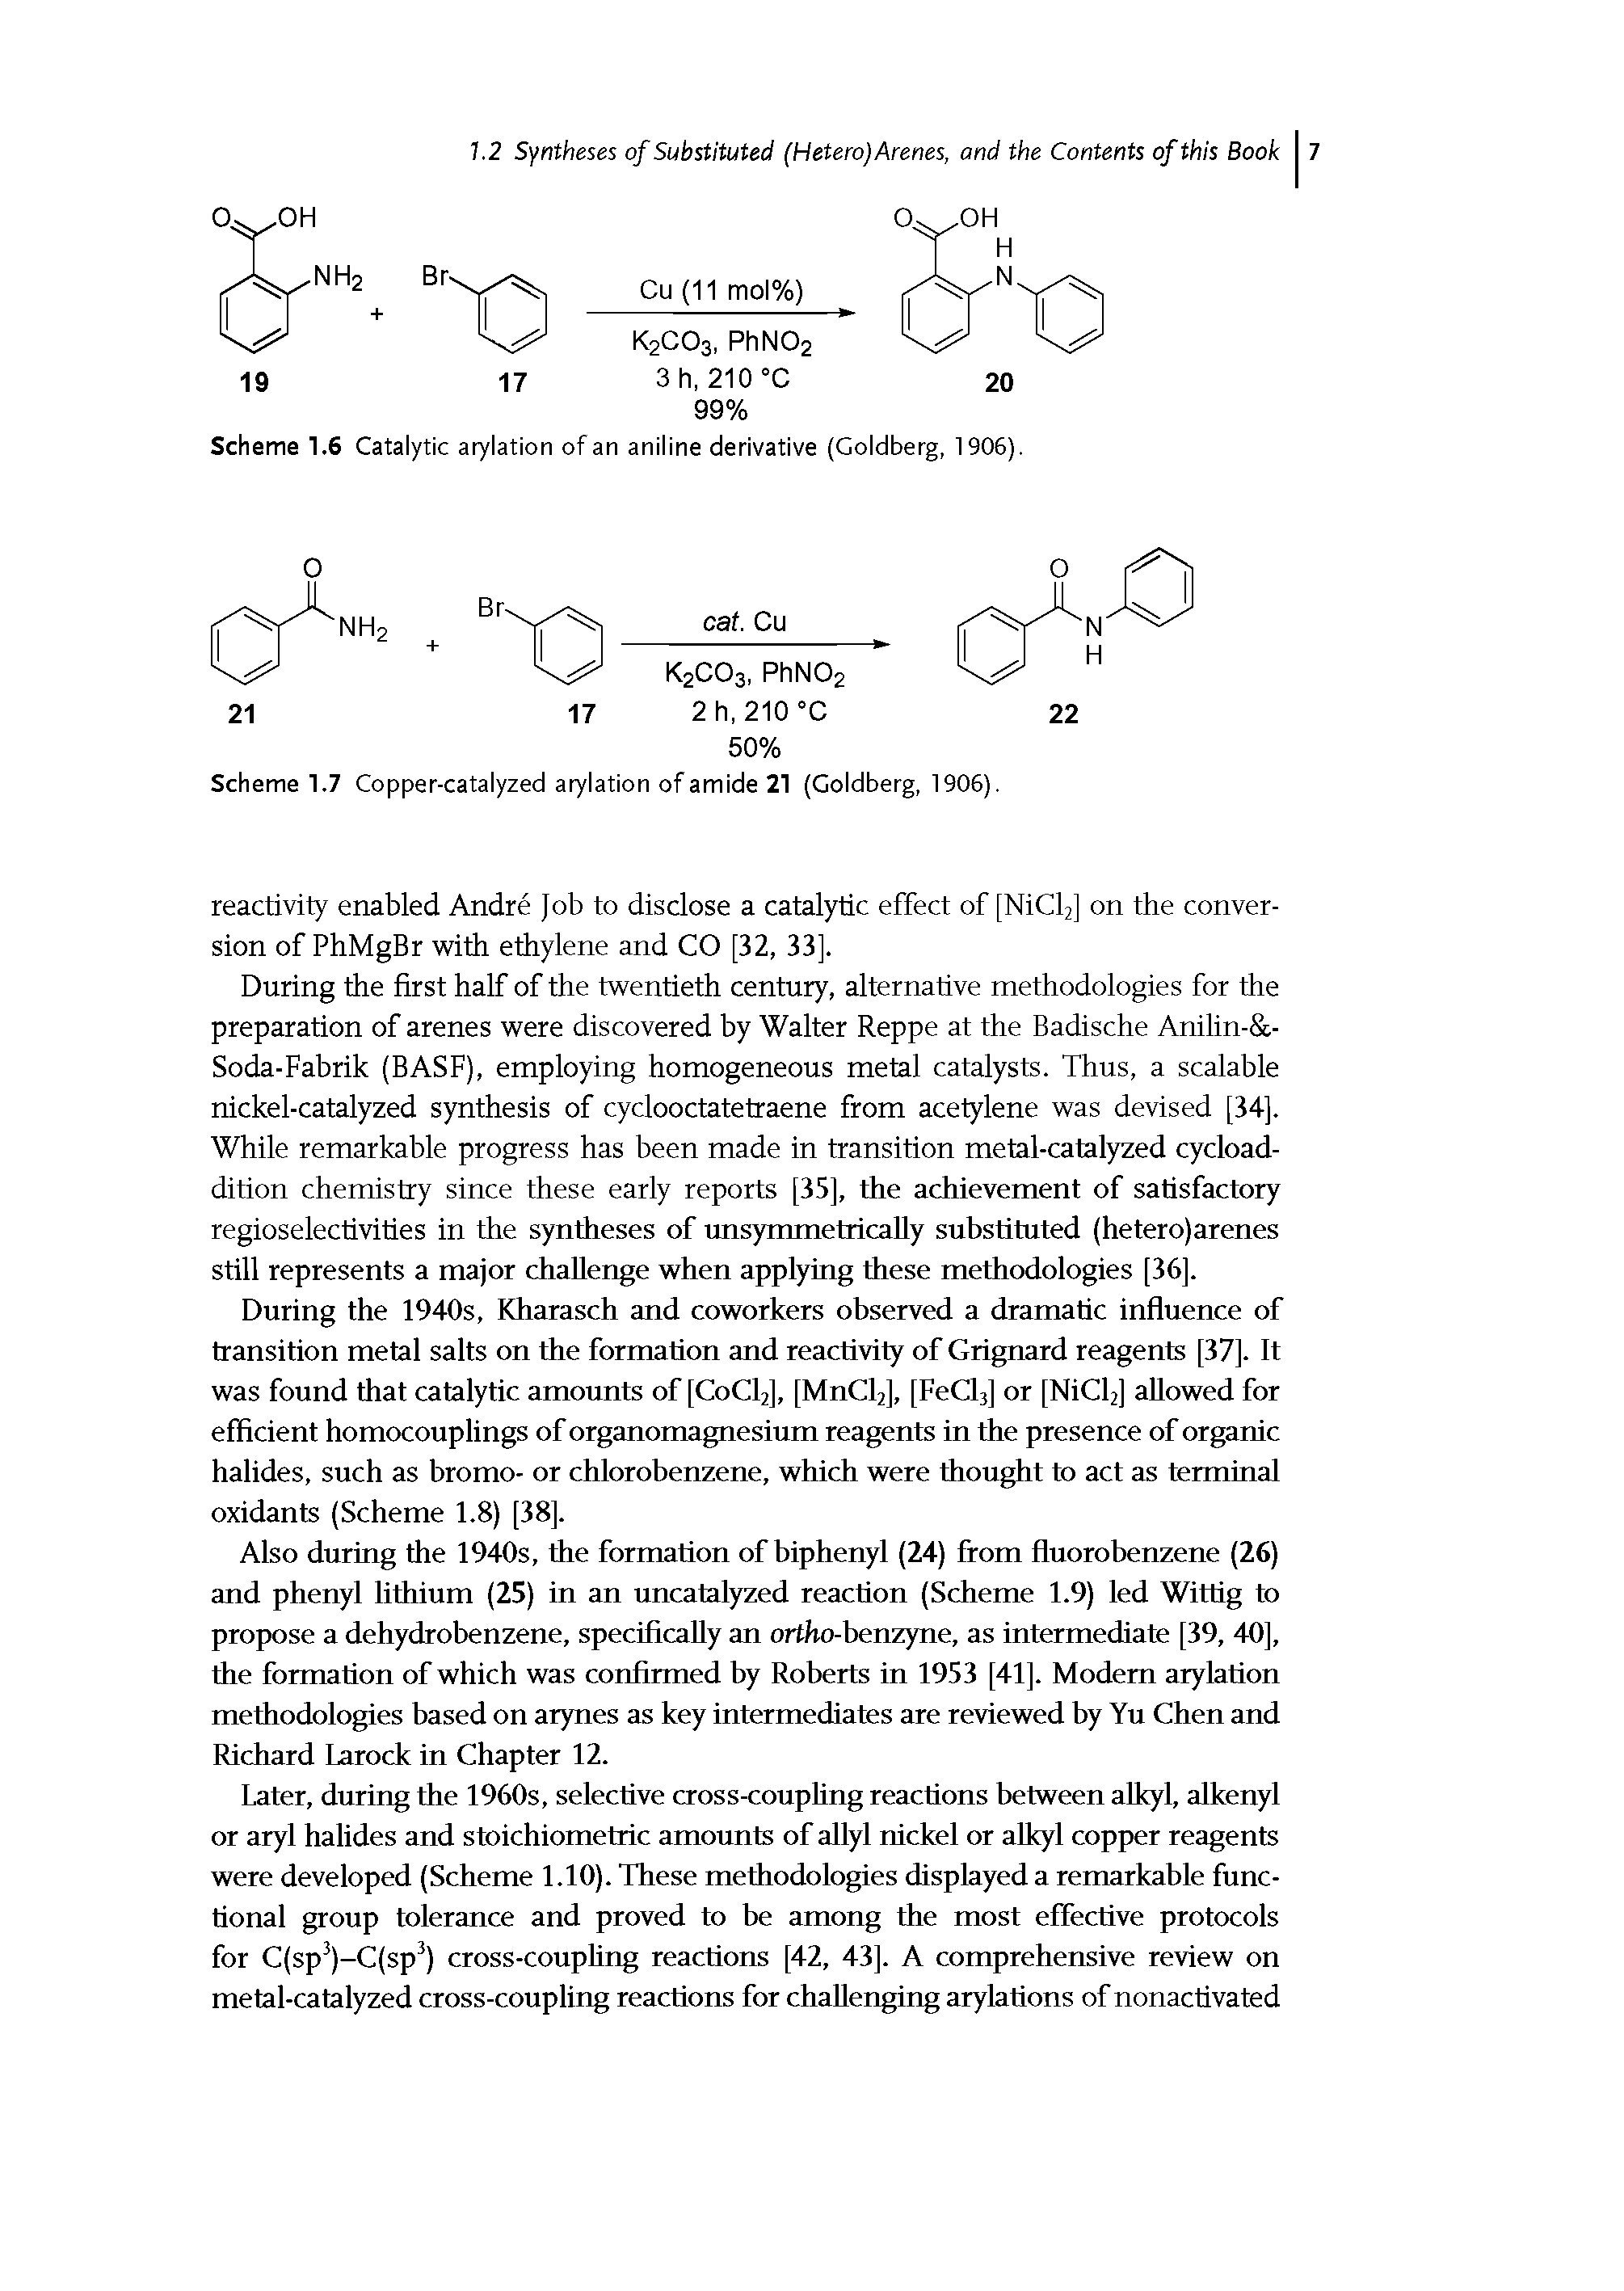 Scheme 1.7 Copper-catalyzed arylation of amide 21 (Goldberg, 1906).